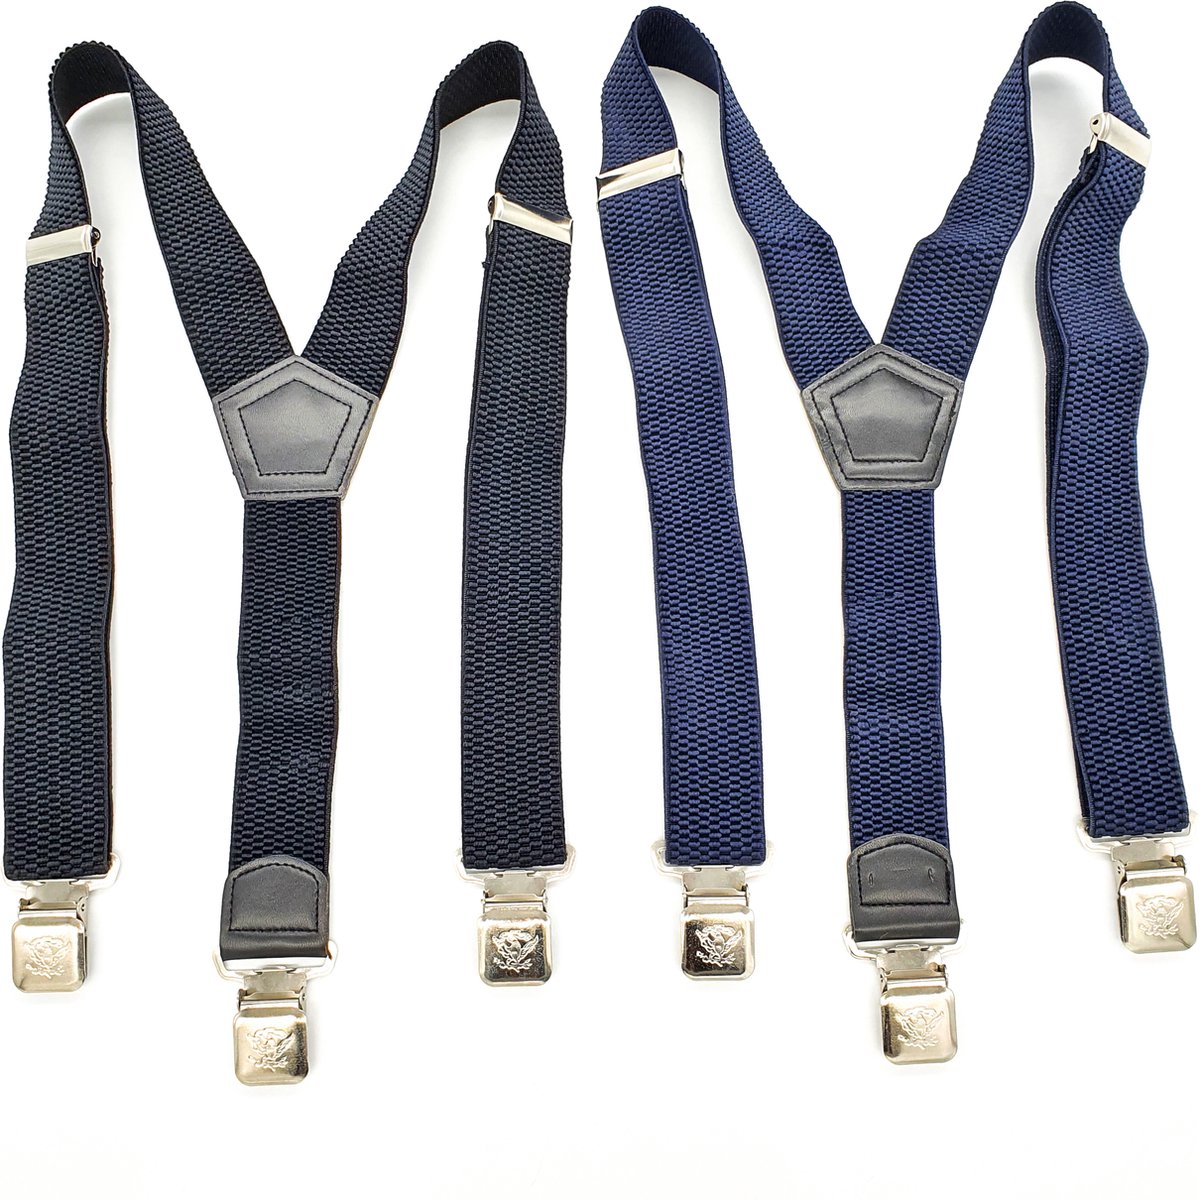 bretels heren - Bretels - bretels heren volwassenen - bretellen voor mannen - 3 clips - bretels heren met brede clip 2 Stuks - 1 x Zwart, 1 x Blauw